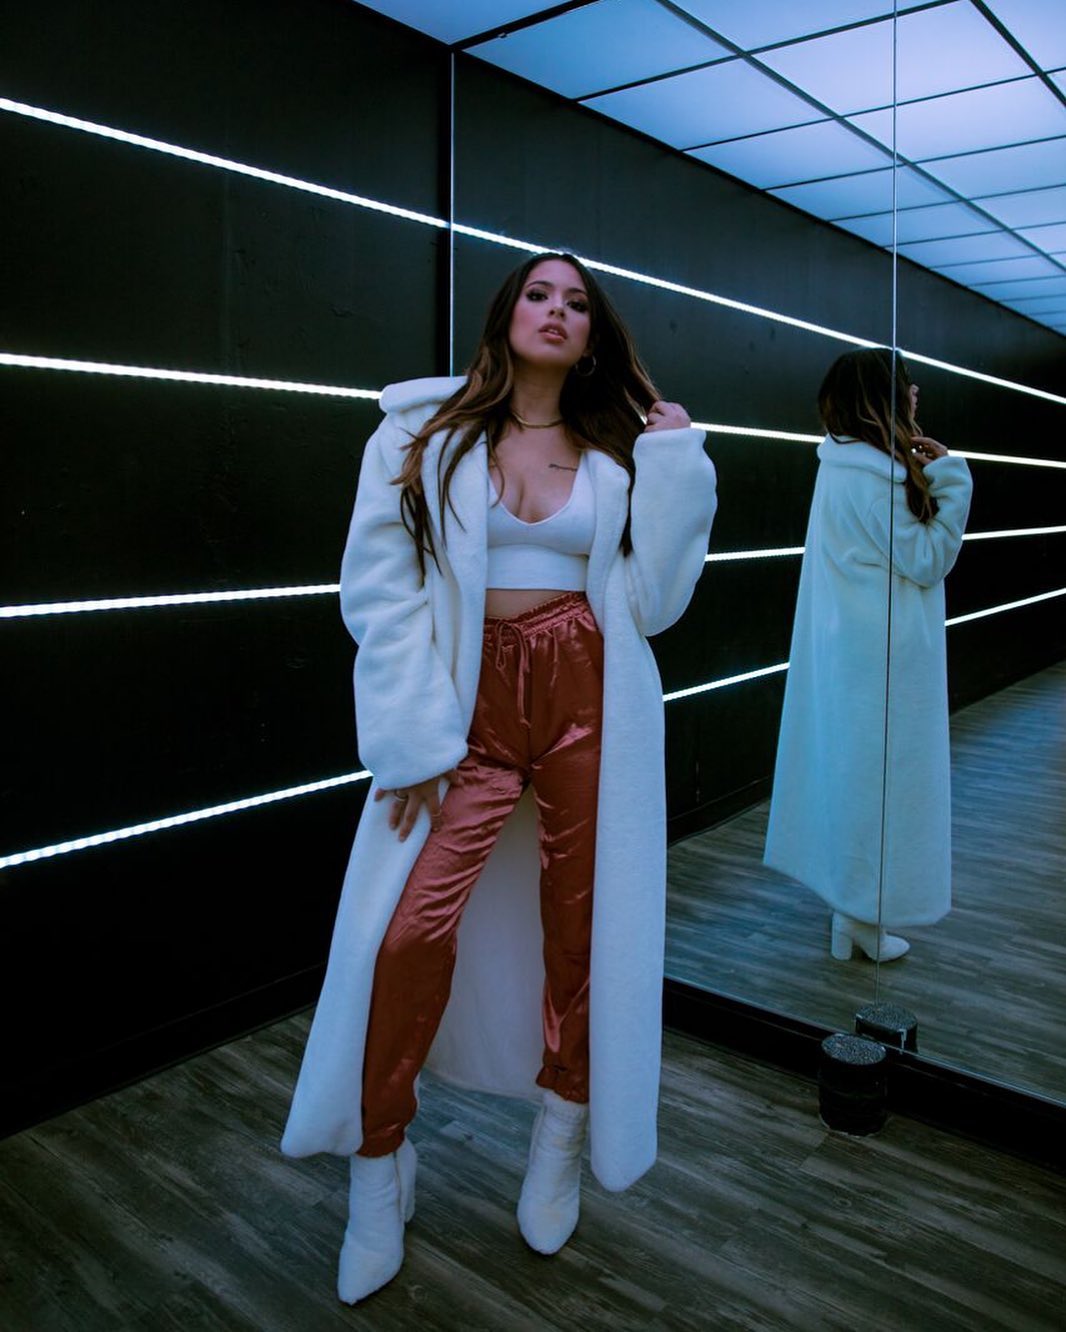 Jasmine's Breathtaking Look In White Crop Top & Pyjama Topped With Long Coat